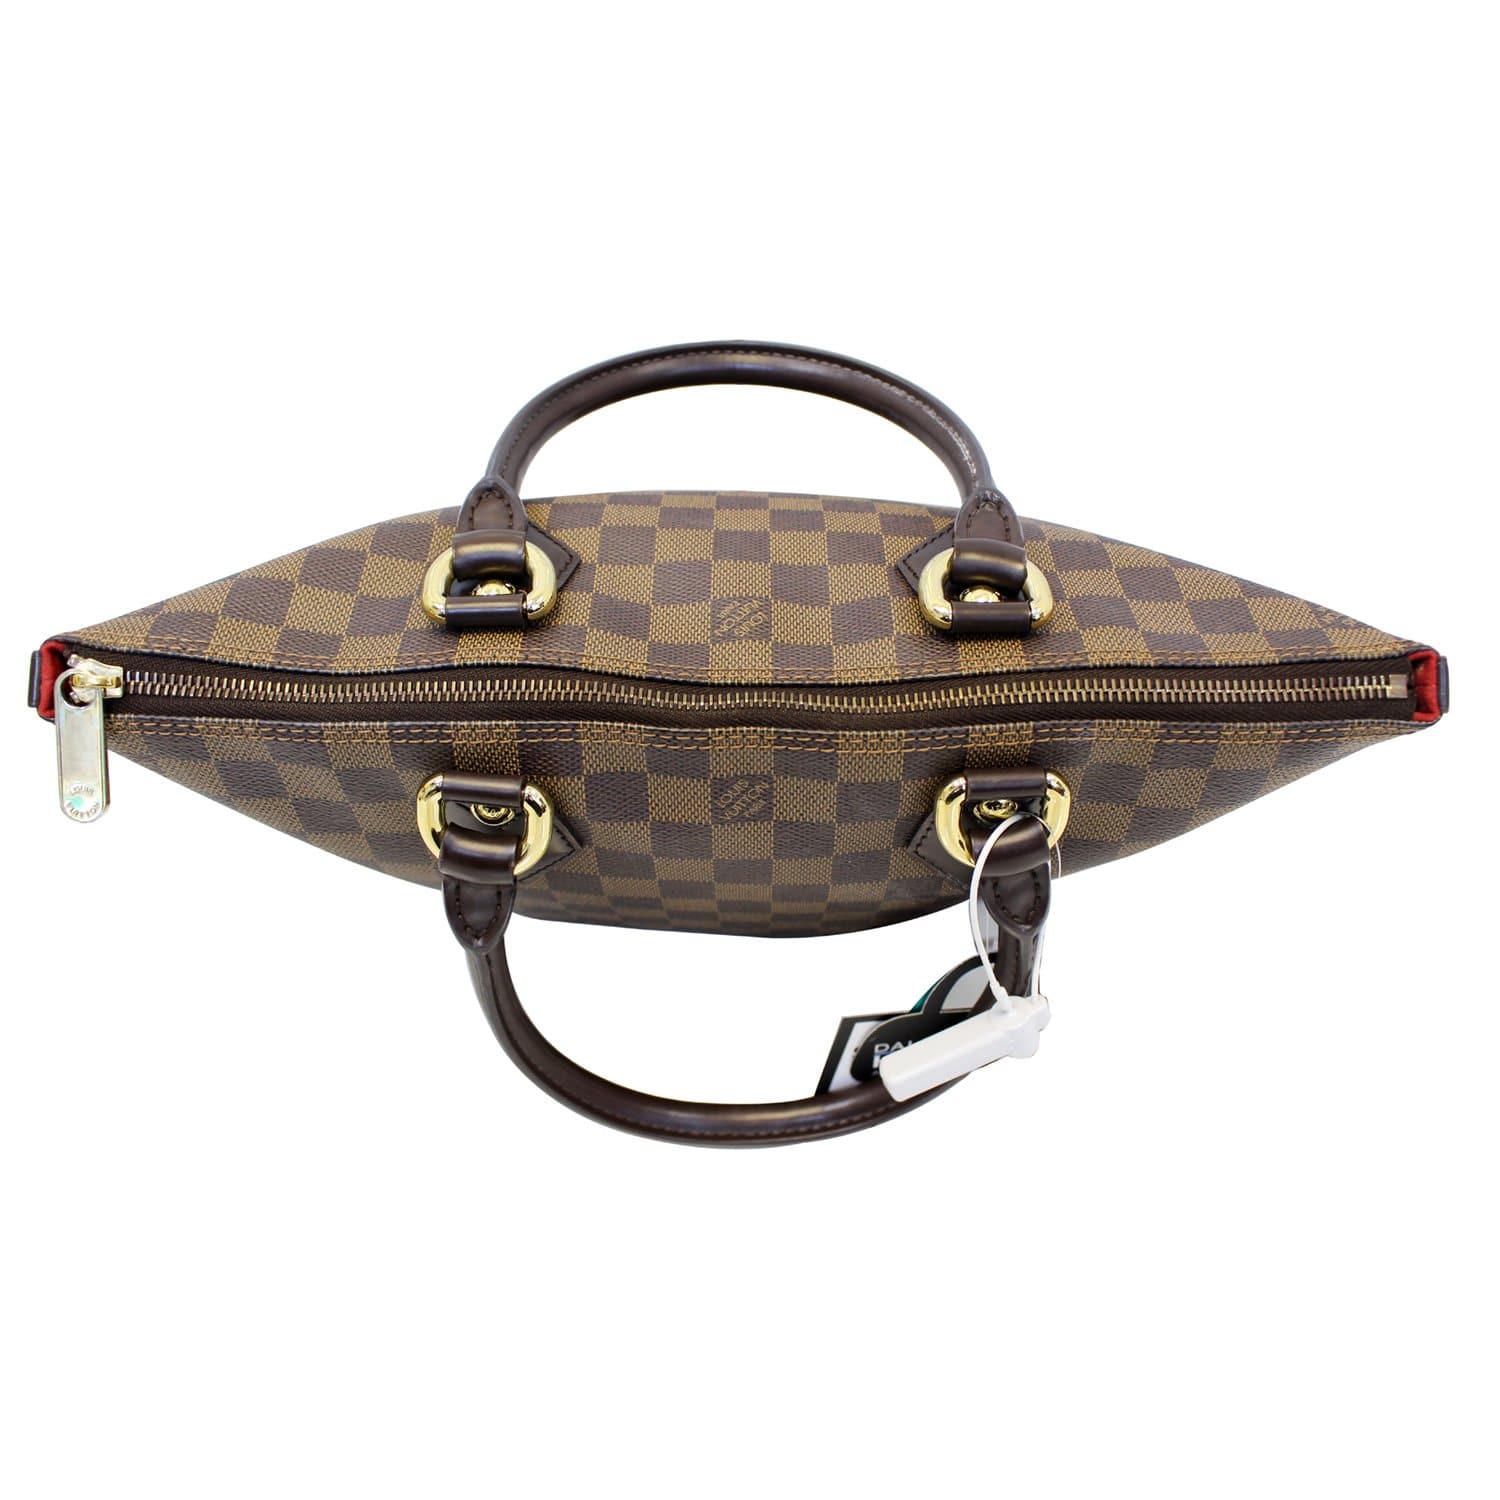 Louis Vuitton Saleya PM Tote Damier Ebene Shoulder Bag Handbag